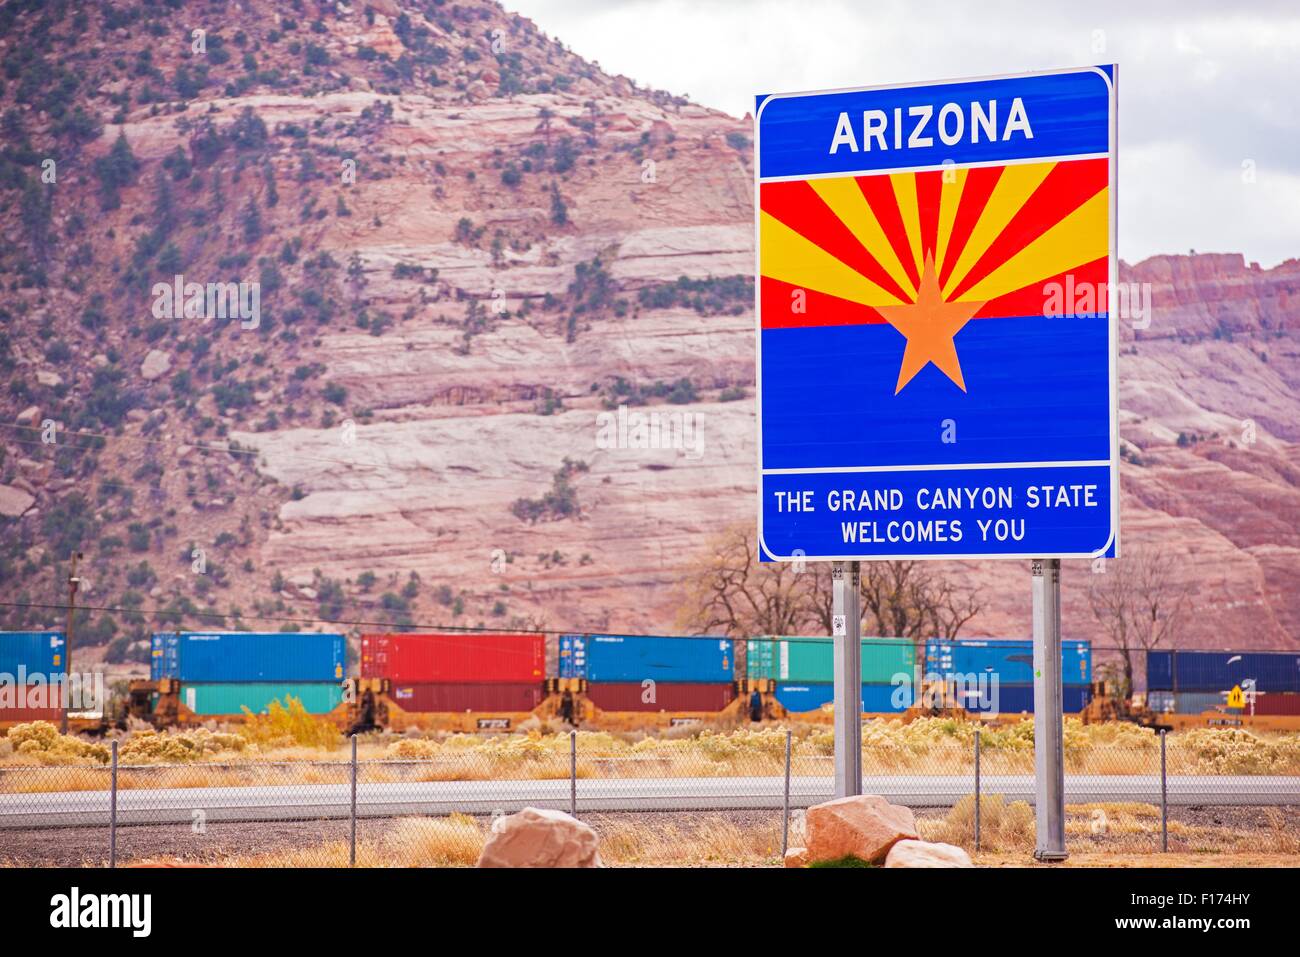 Arizona State Entrance Sign, Highway and the Railroad. Arizona, United States.Welcome in Arizona. Stock Photo